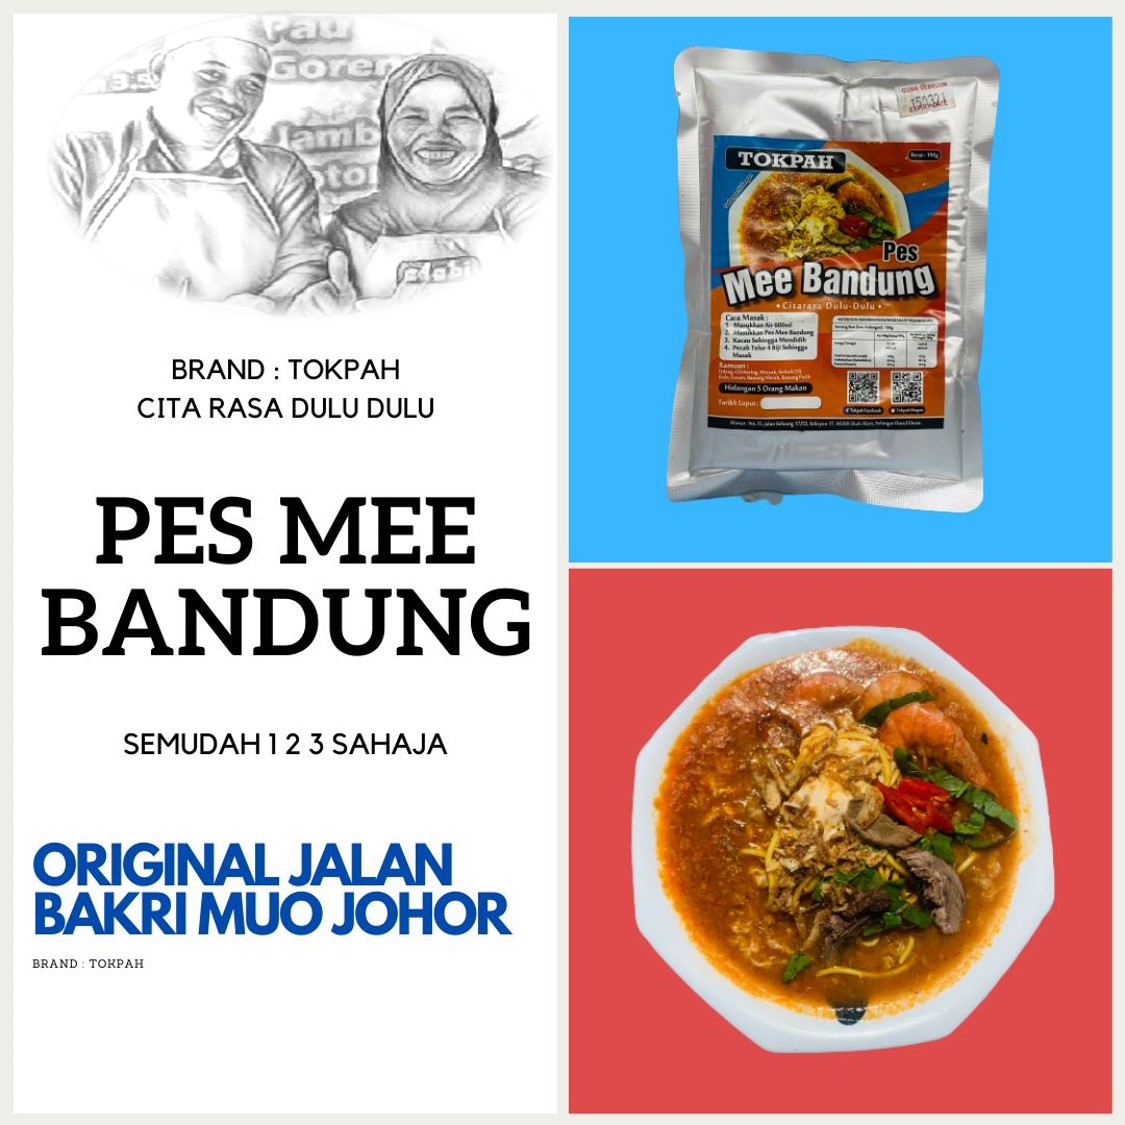 TokPah Pes Mee Bandung Original Muo Johor 👍🔥